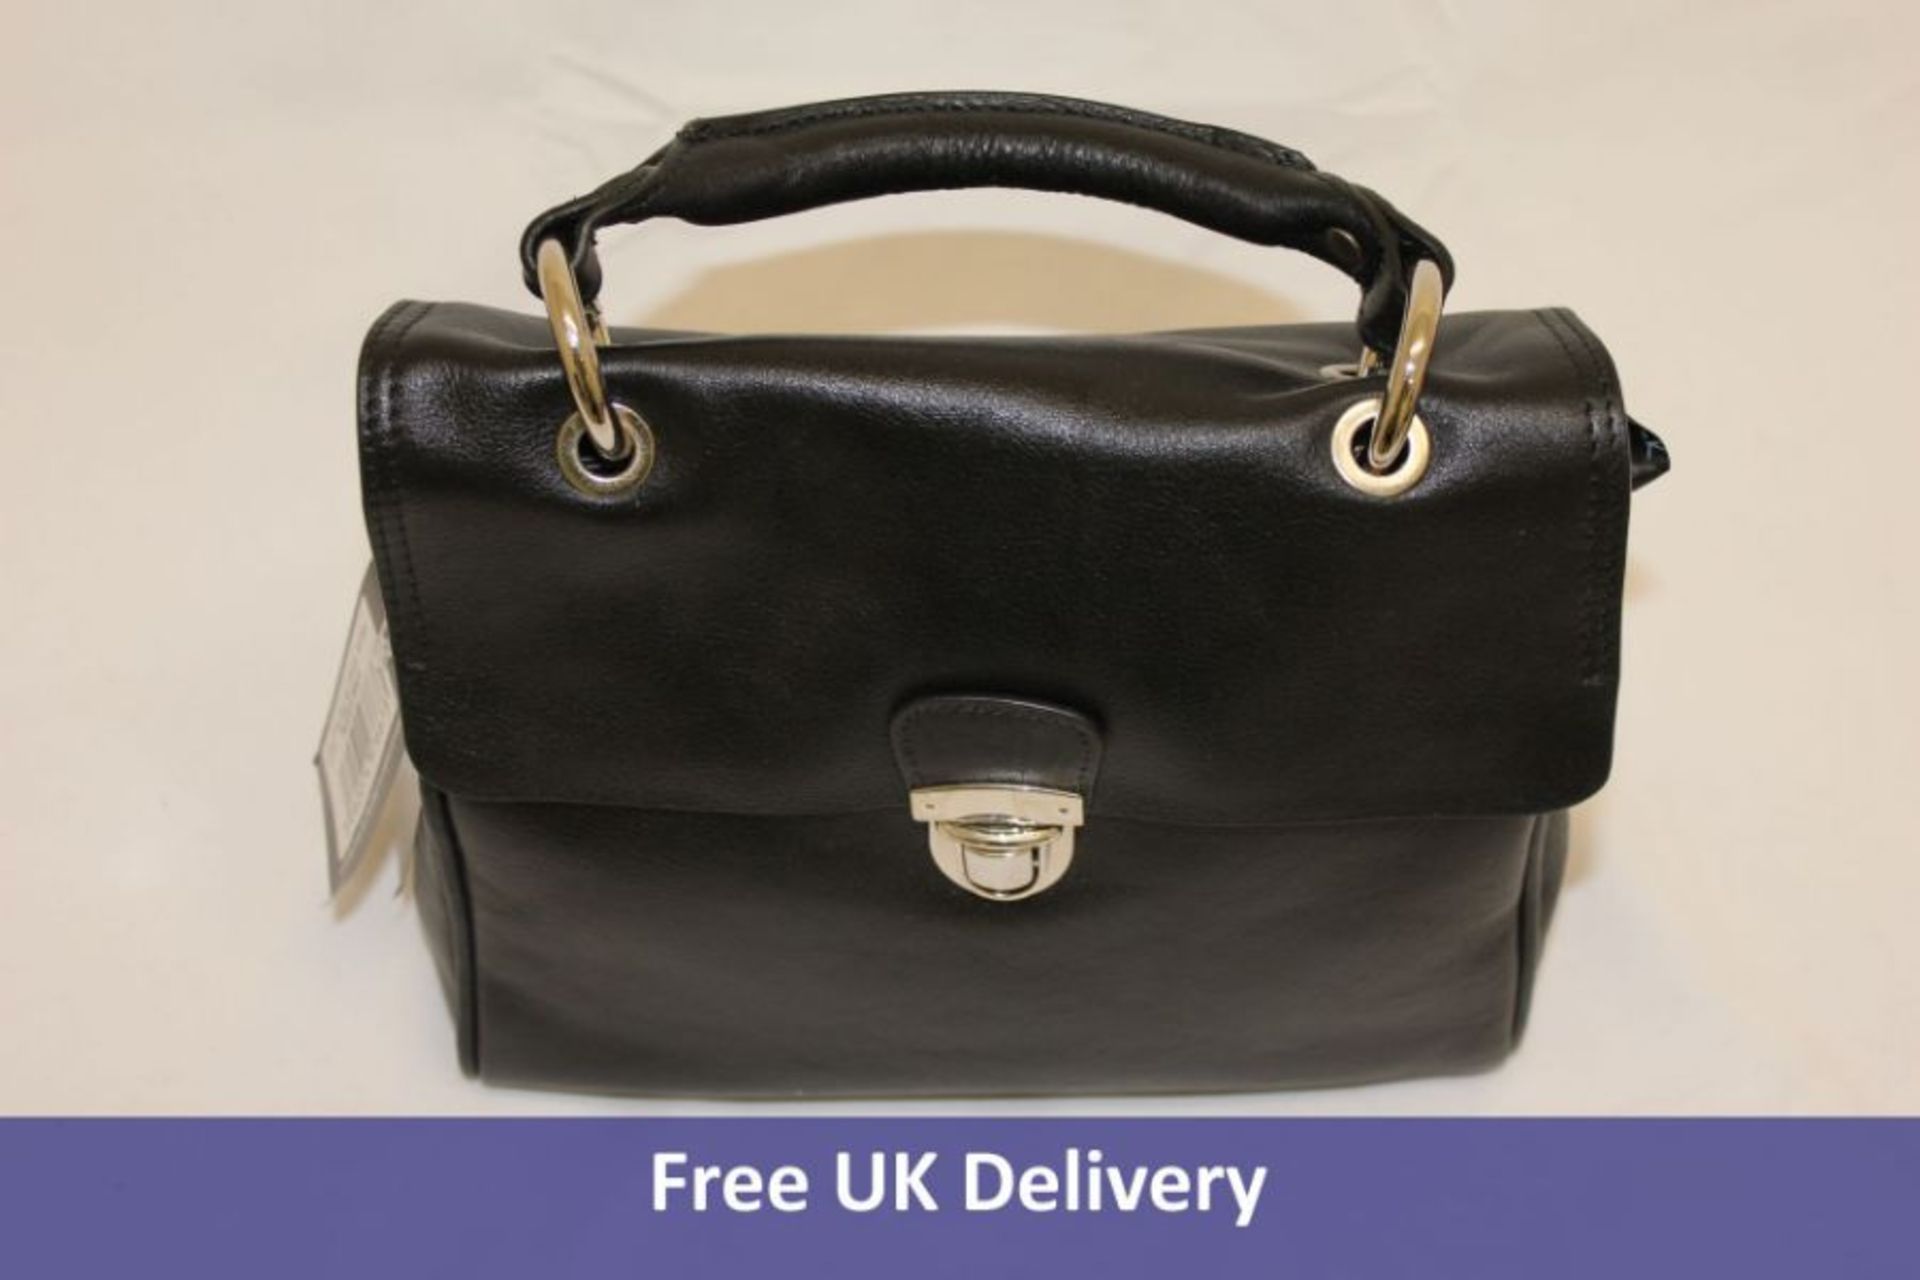 Three Catwalk Collection Handbags to include 3x Vintage Leather Handbag Shoulder, Bag/Cross Body Bag - Image 2 of 4